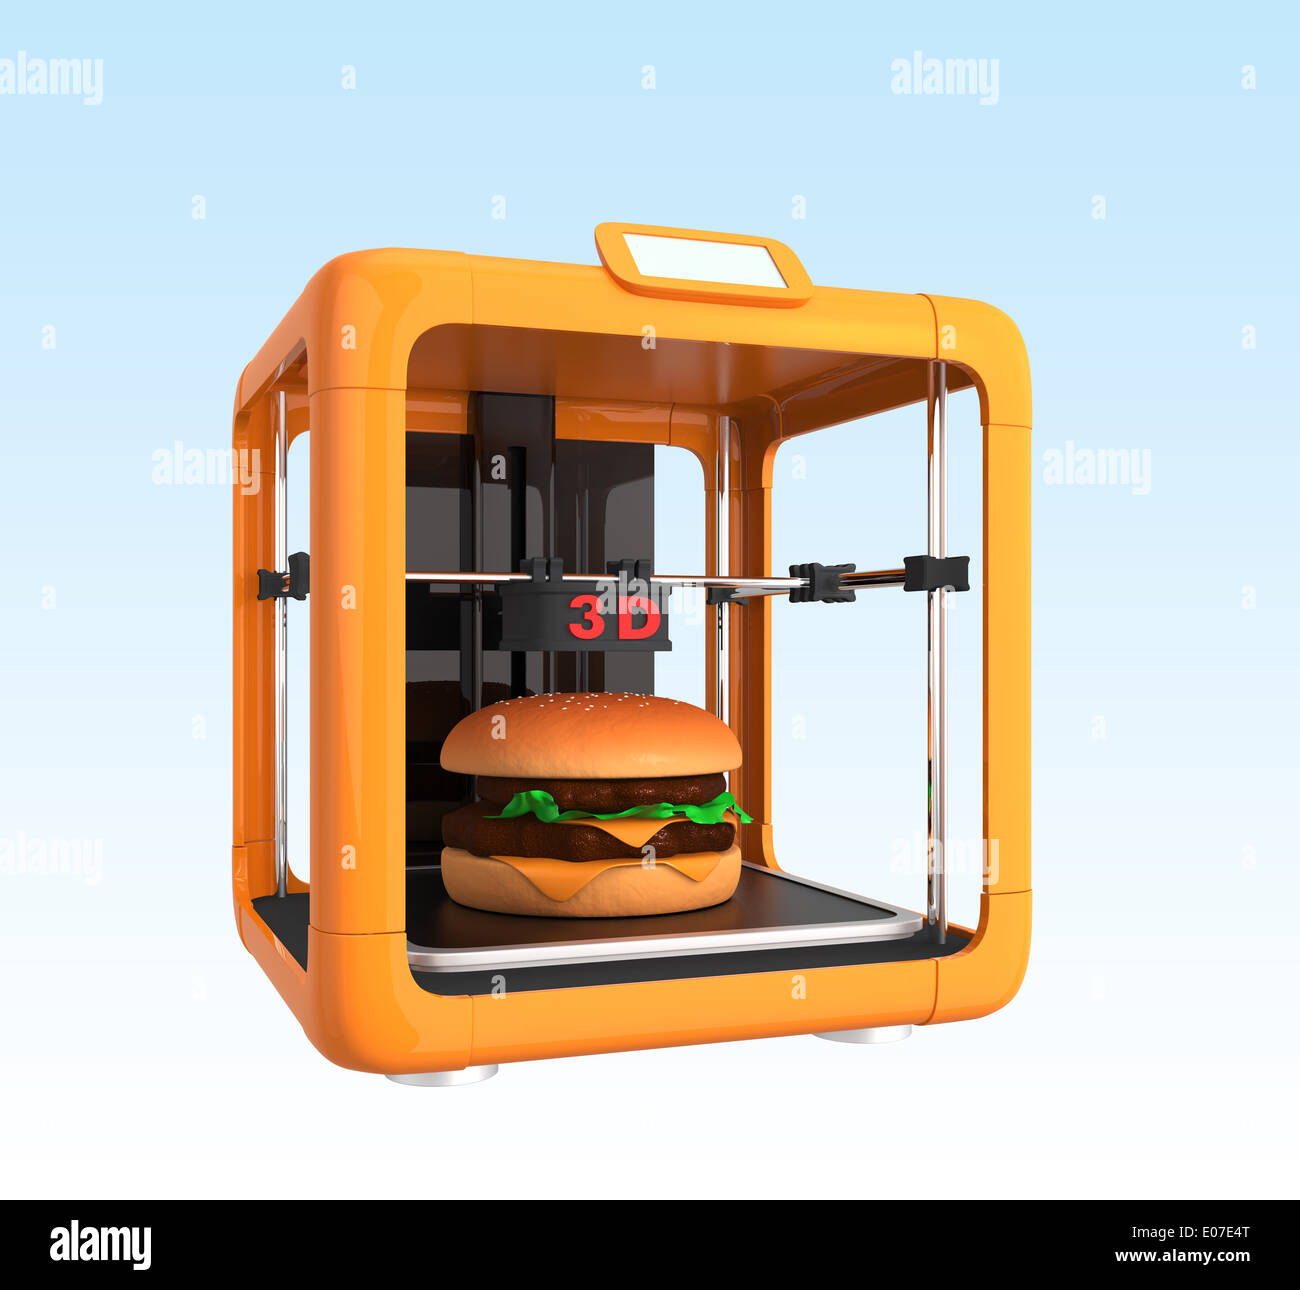 Impresora 3d de alimentos fotografías e imágenes de alta resolución - Alamy